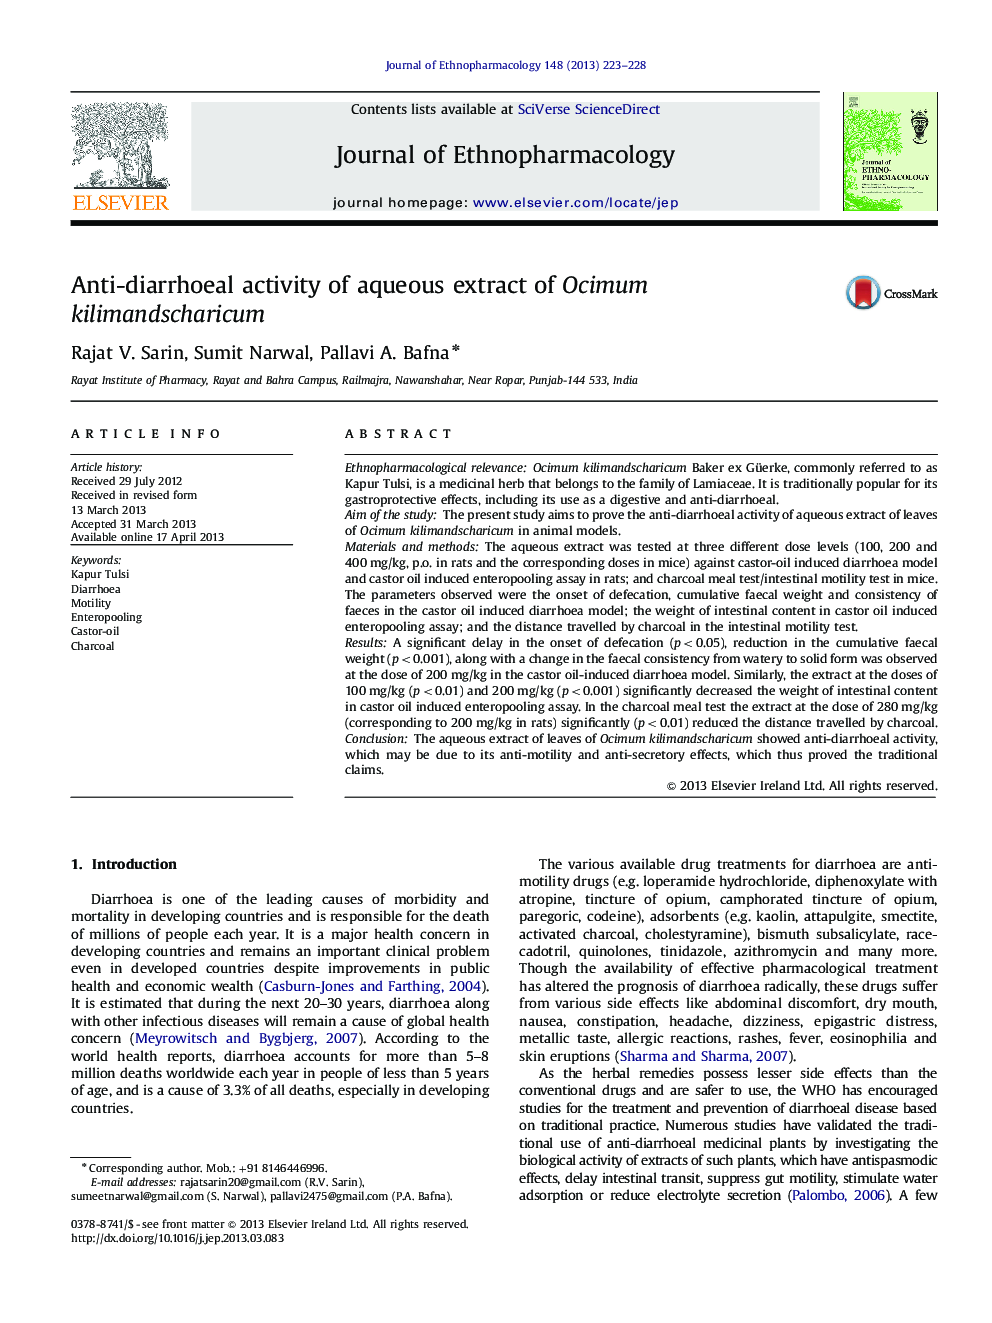 Anti-diarrhoeal activity of aqueous extract of Ocimum kilimandscharicum